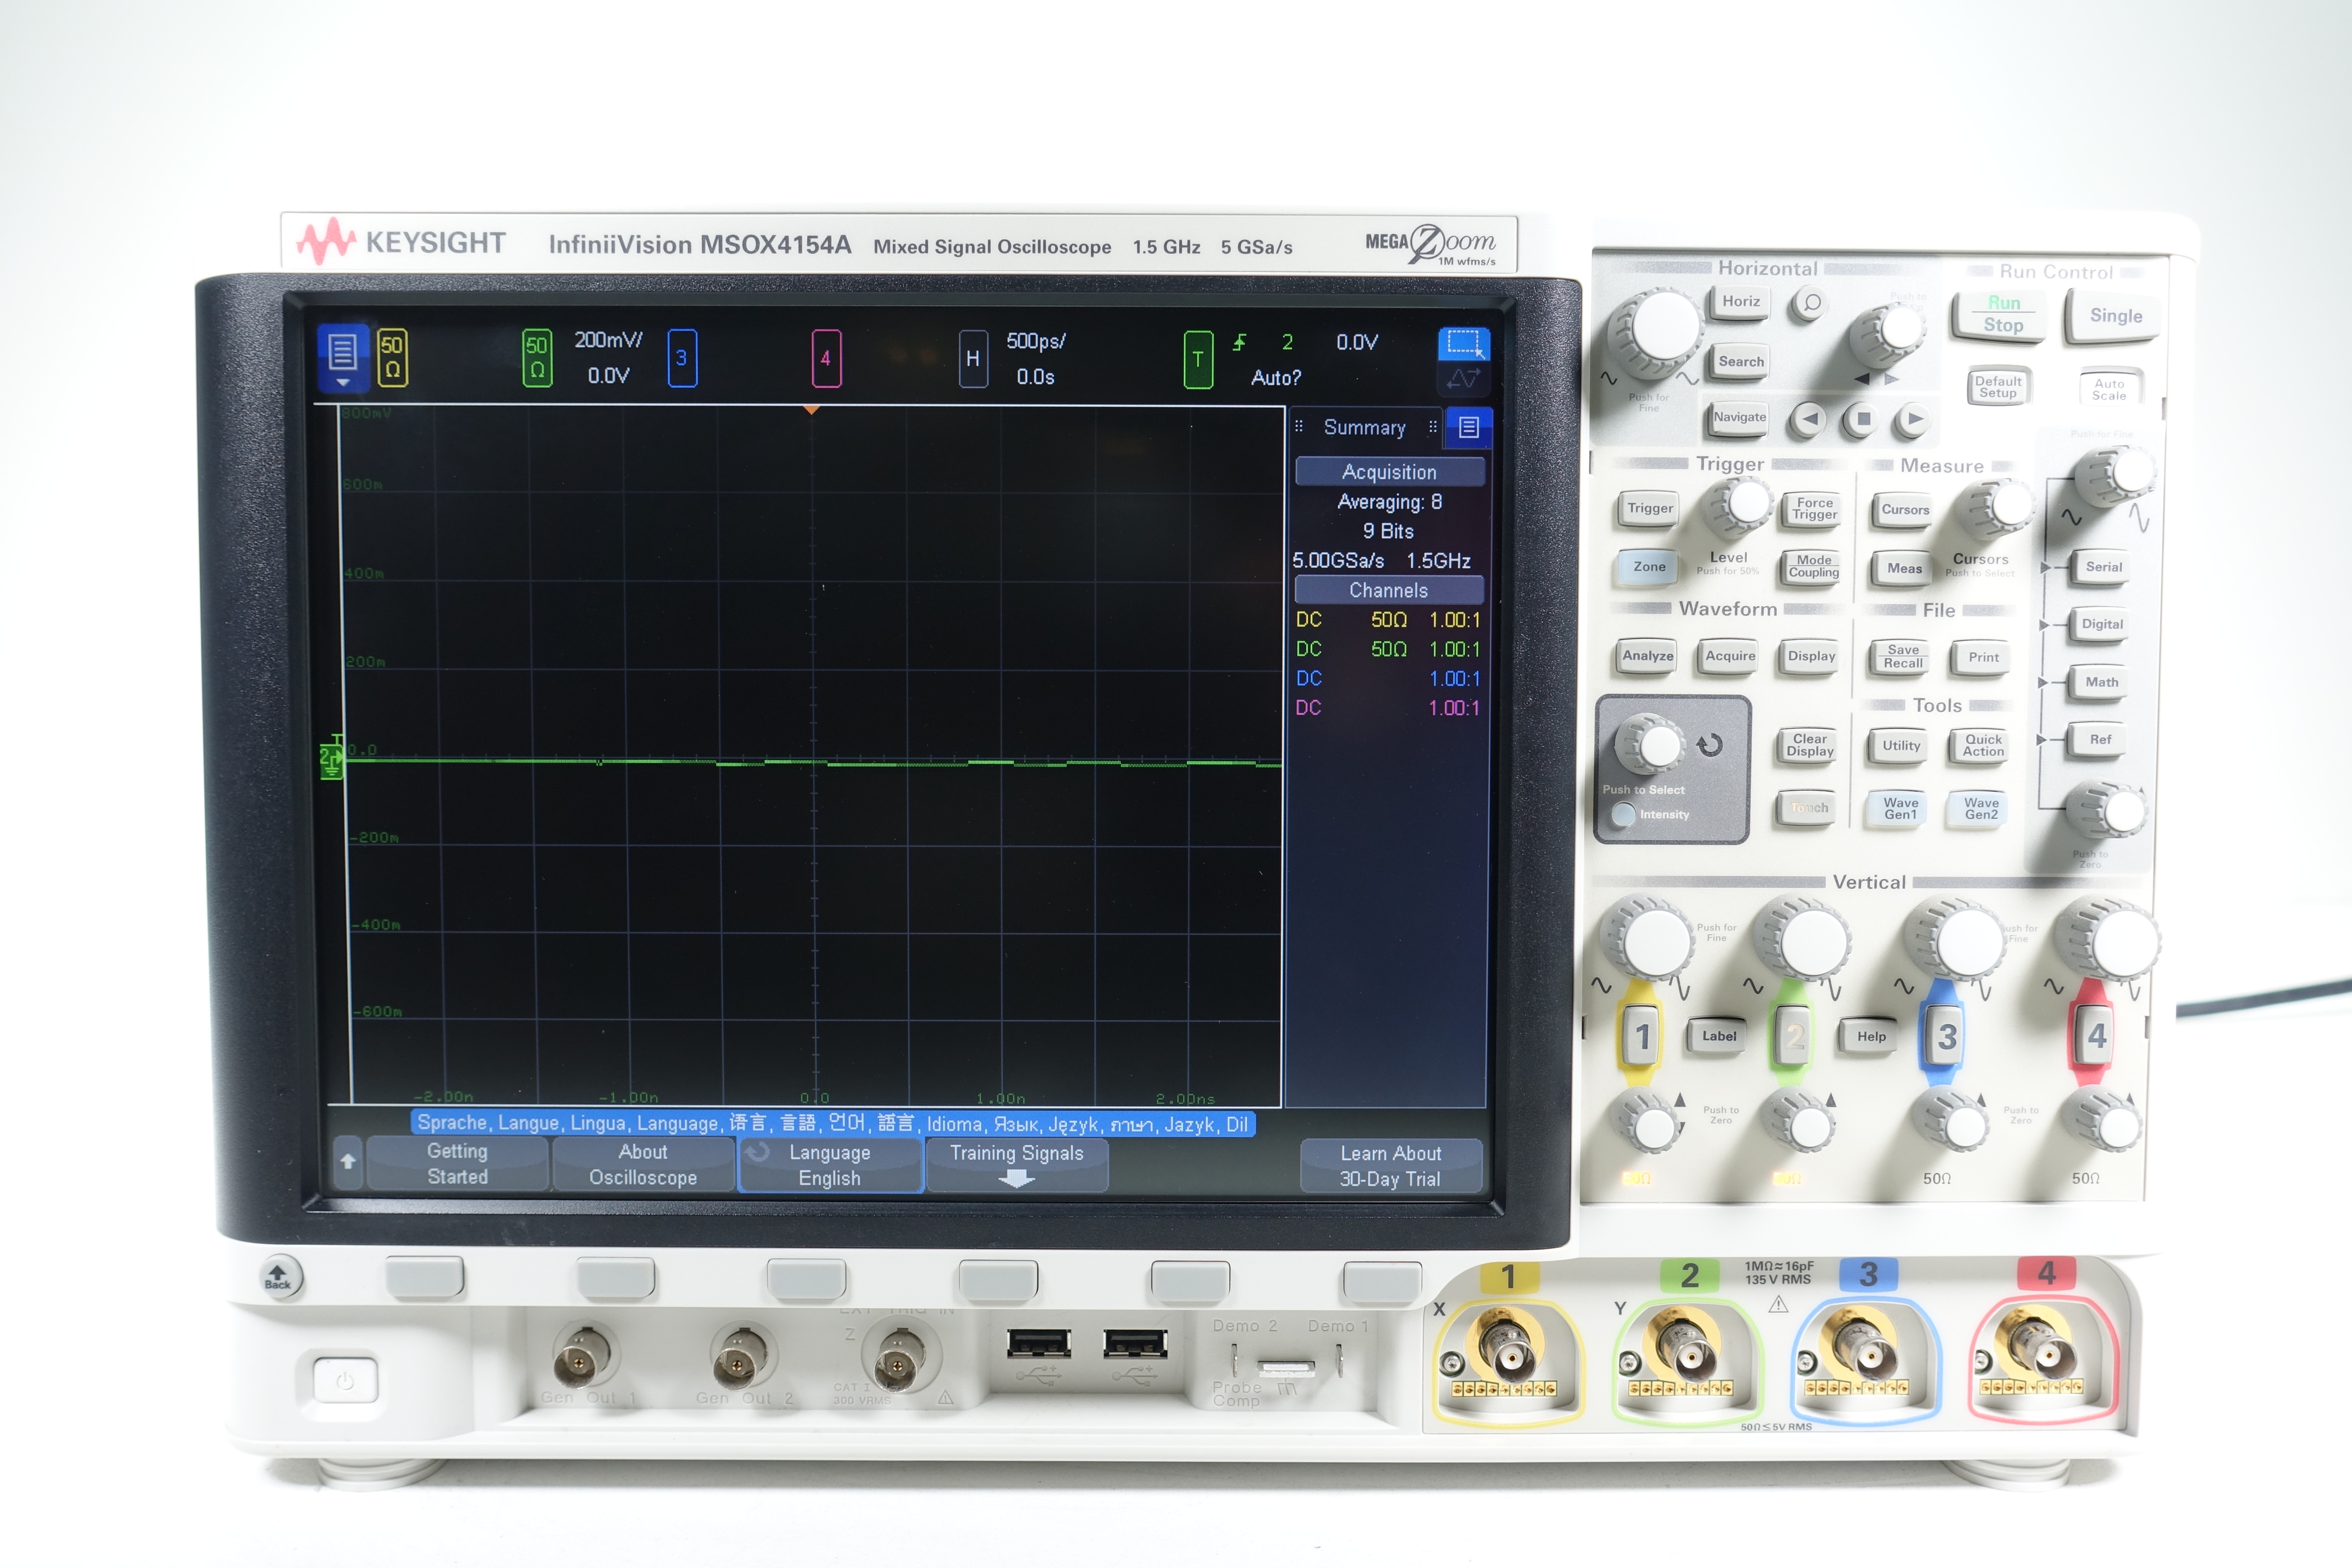 Keysight MSOX4154A Mixed Signal Oscilloscope / 1.5 GHz / 4 Analog plus 16 Digital Channels